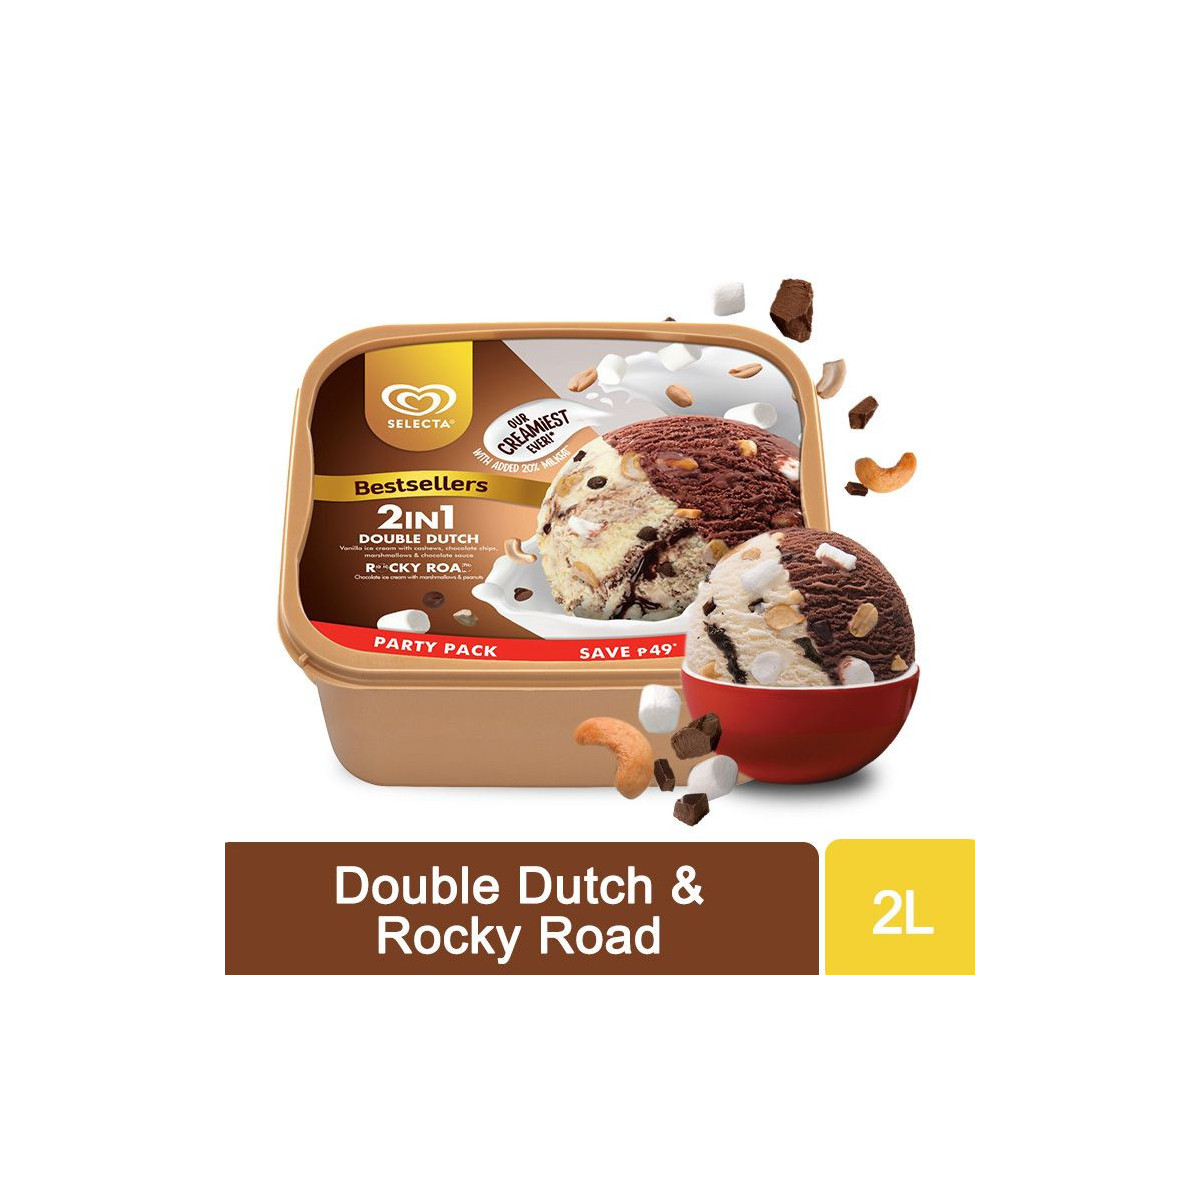 Selecta 2 in 1 Double Dutch - Rocky Road Ice Cream 2L